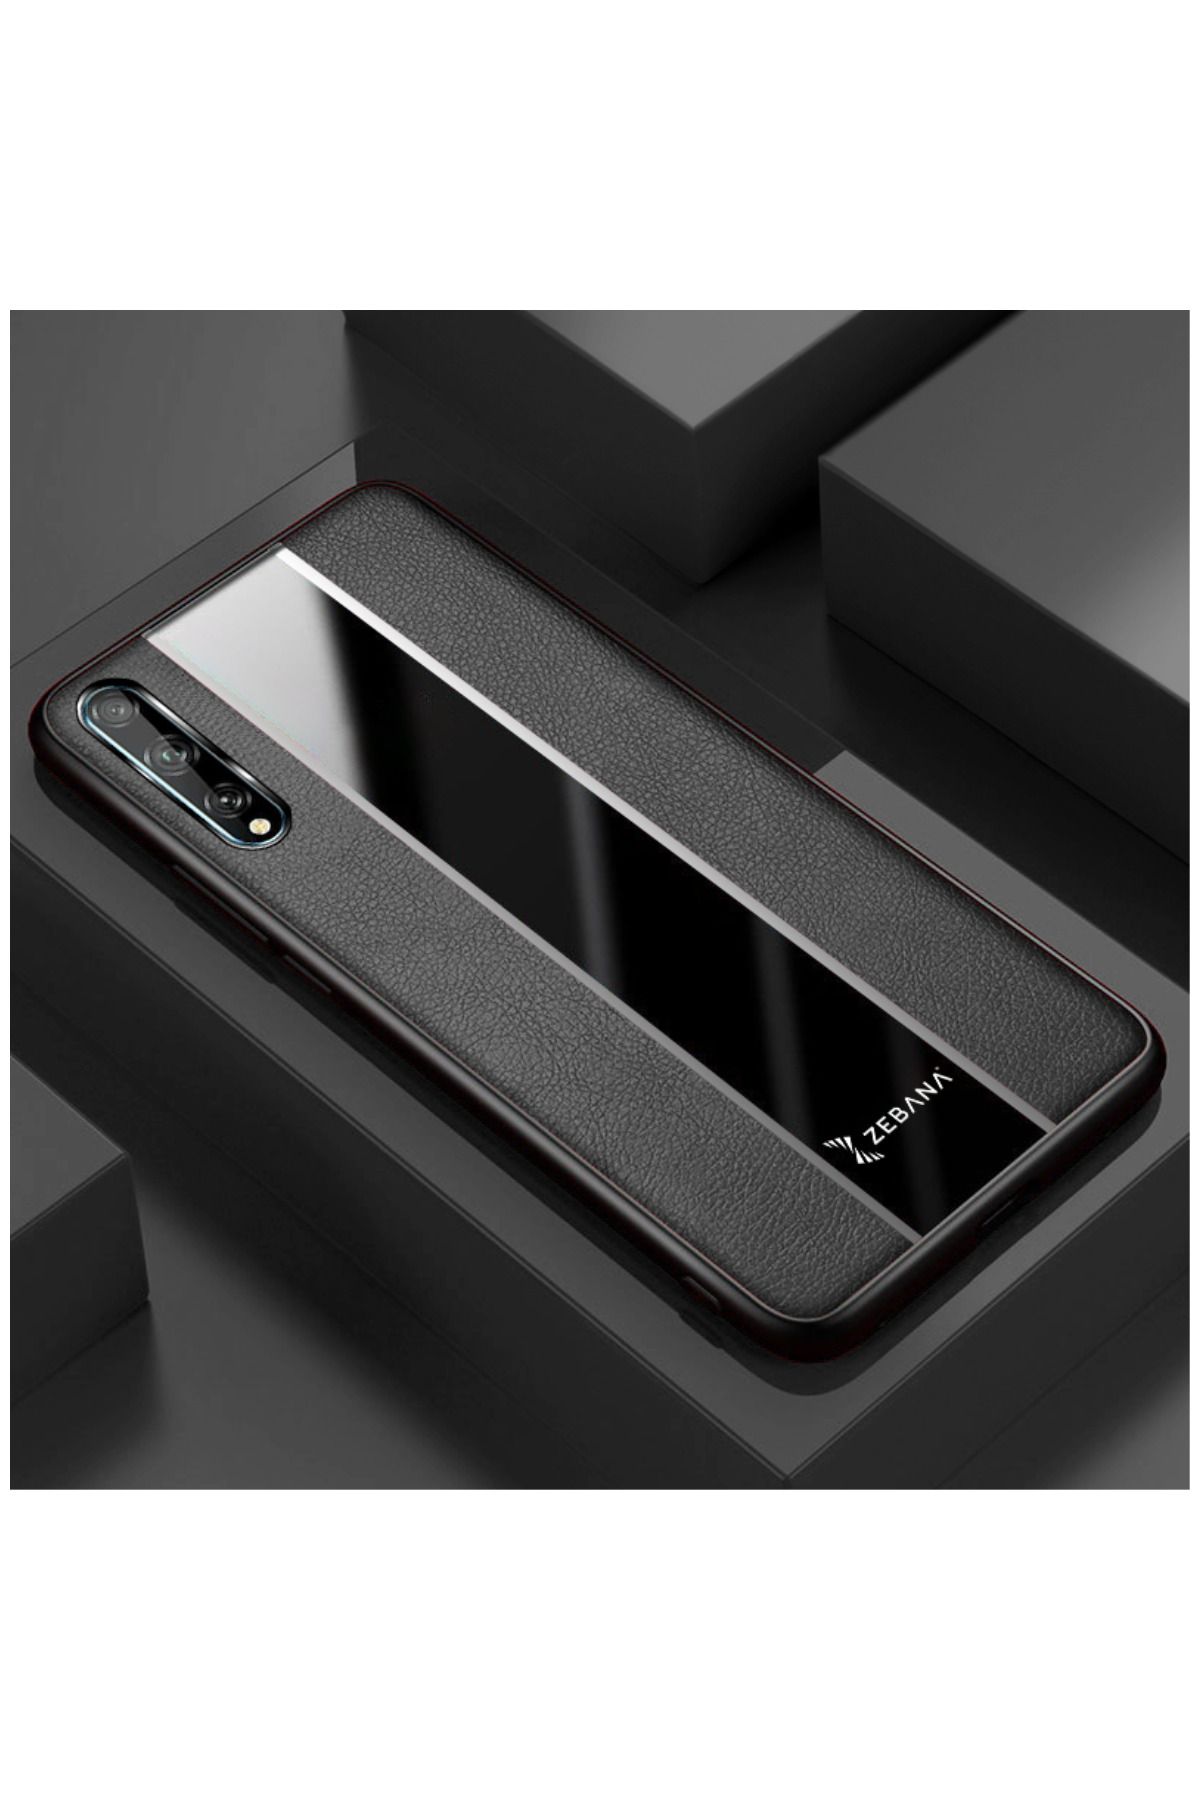 Zebana Huawei P Smart S Uyumlu Kılıf Premium Deri Kılıf Siyah